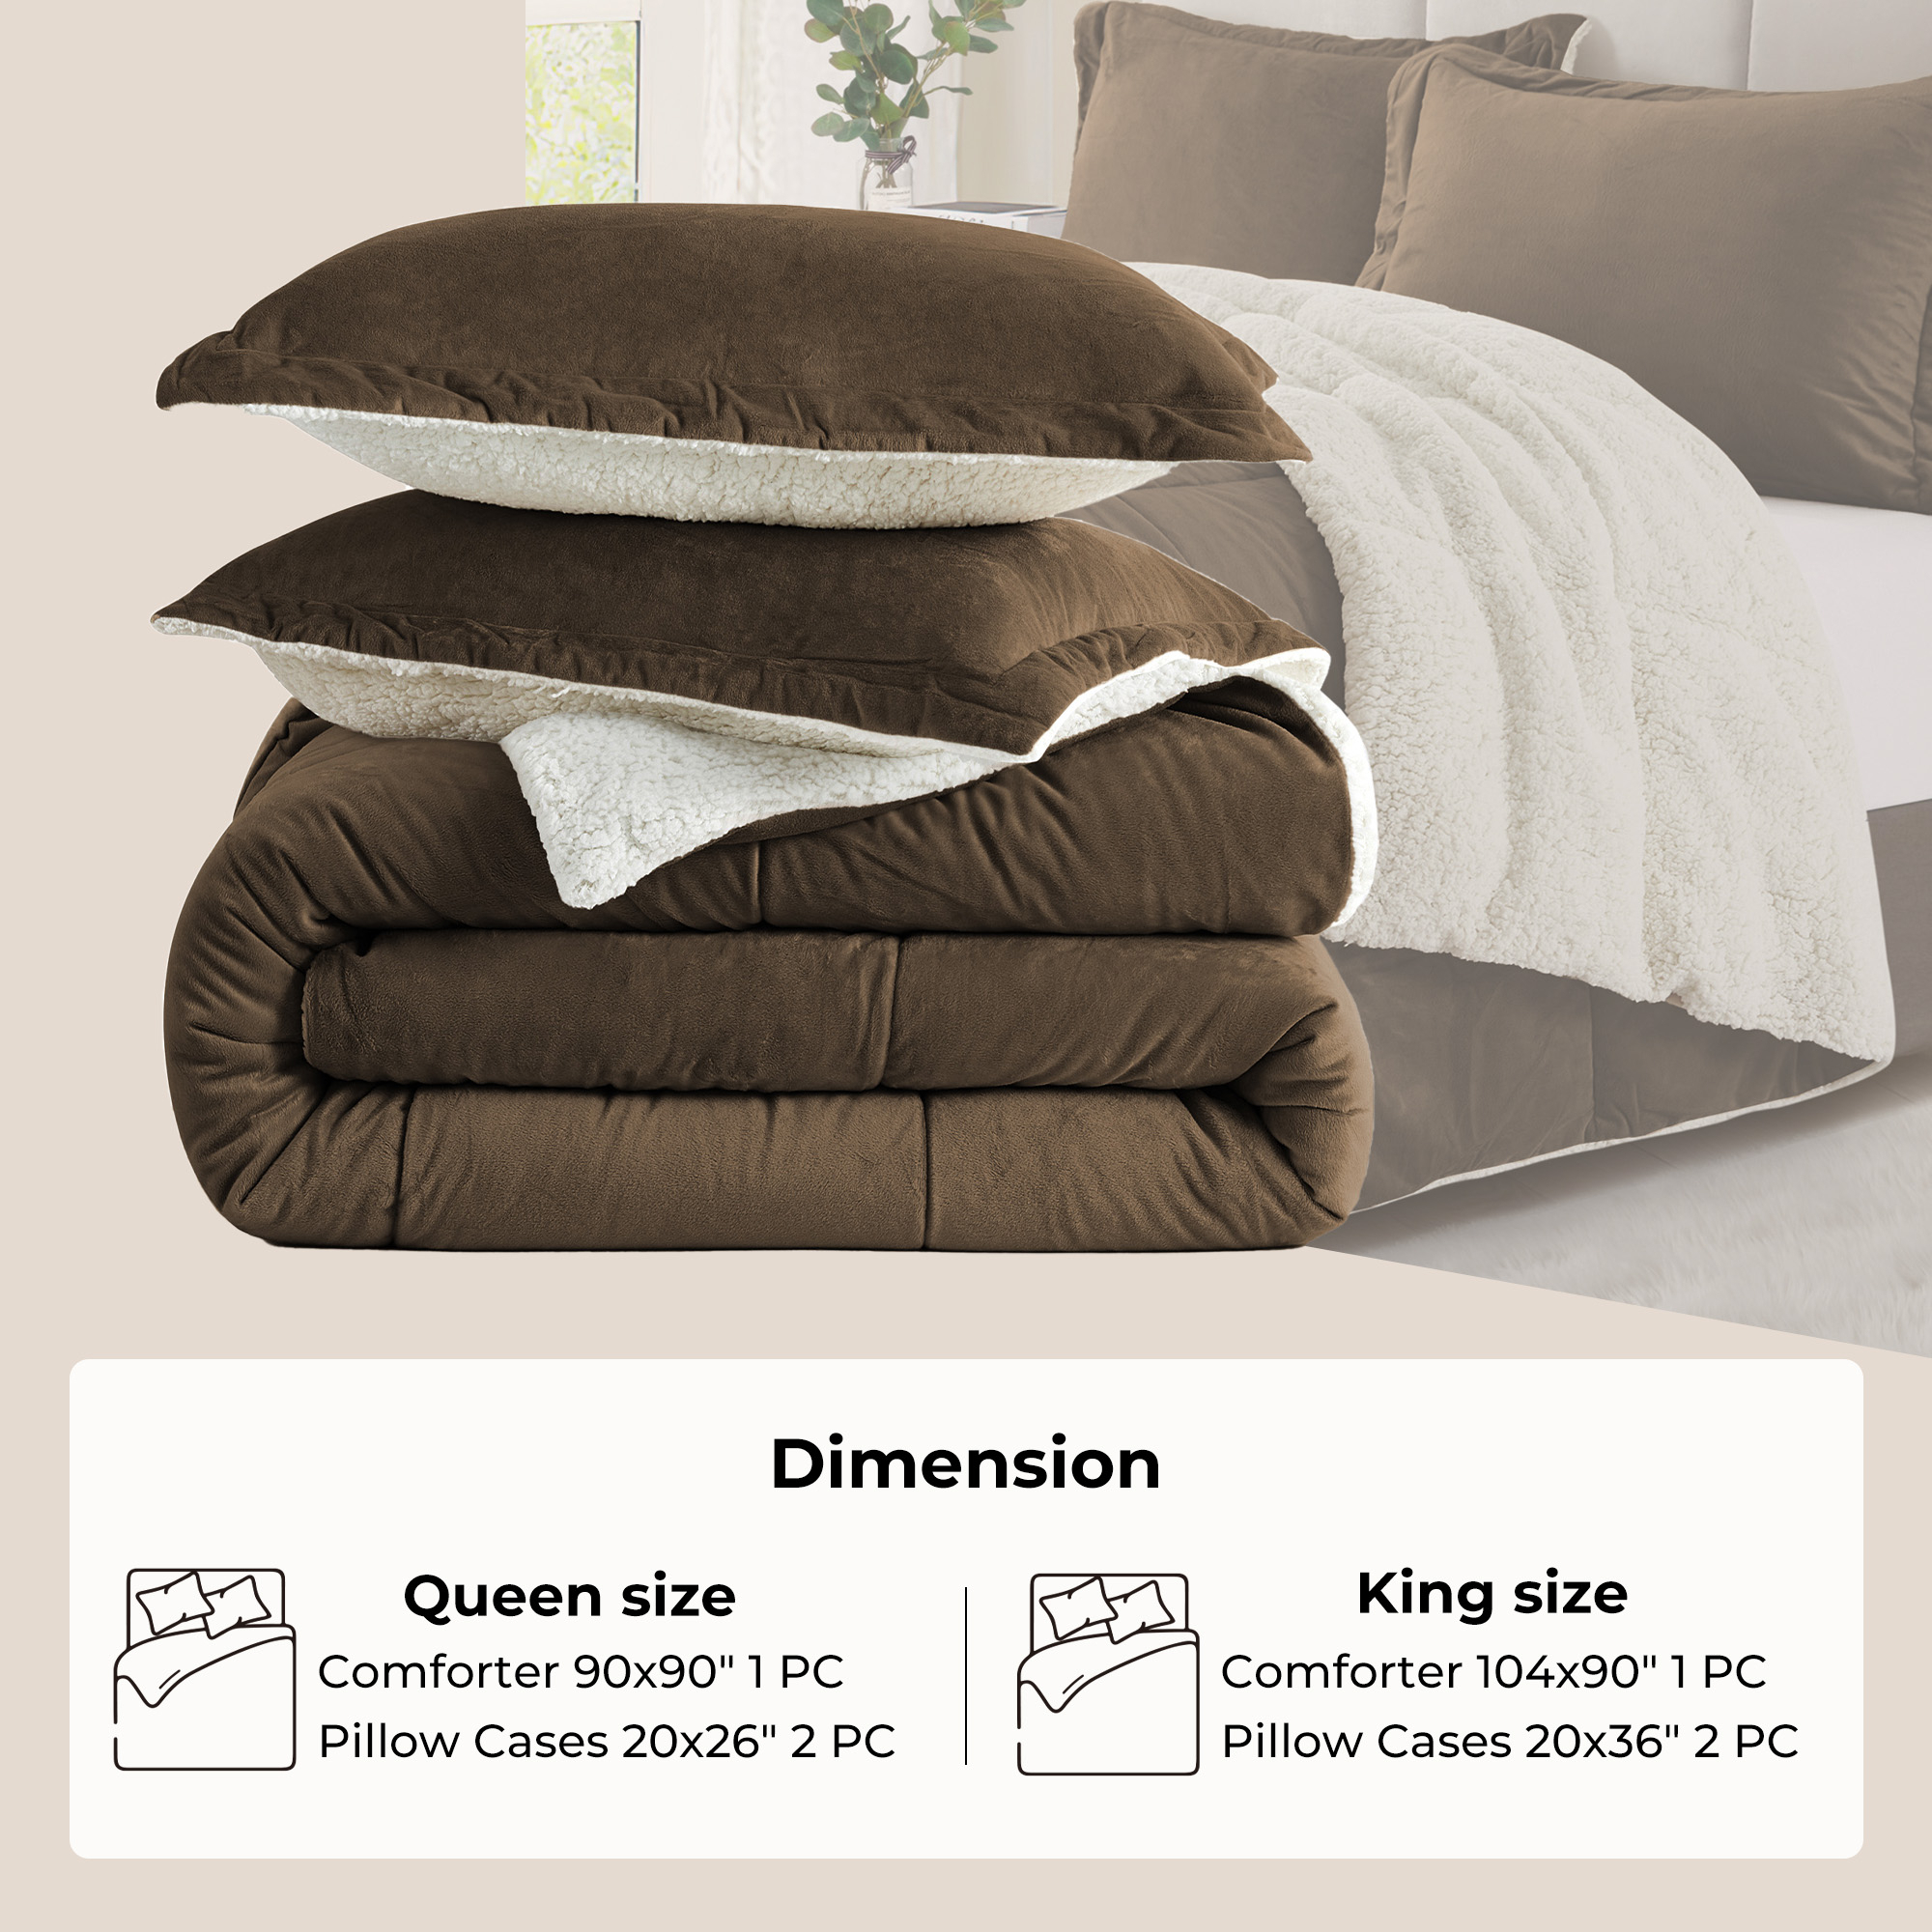 3-Piece Sherpa Reversible Down Alternative Winter Comforter Set - Chocolate / Medium Weight, King